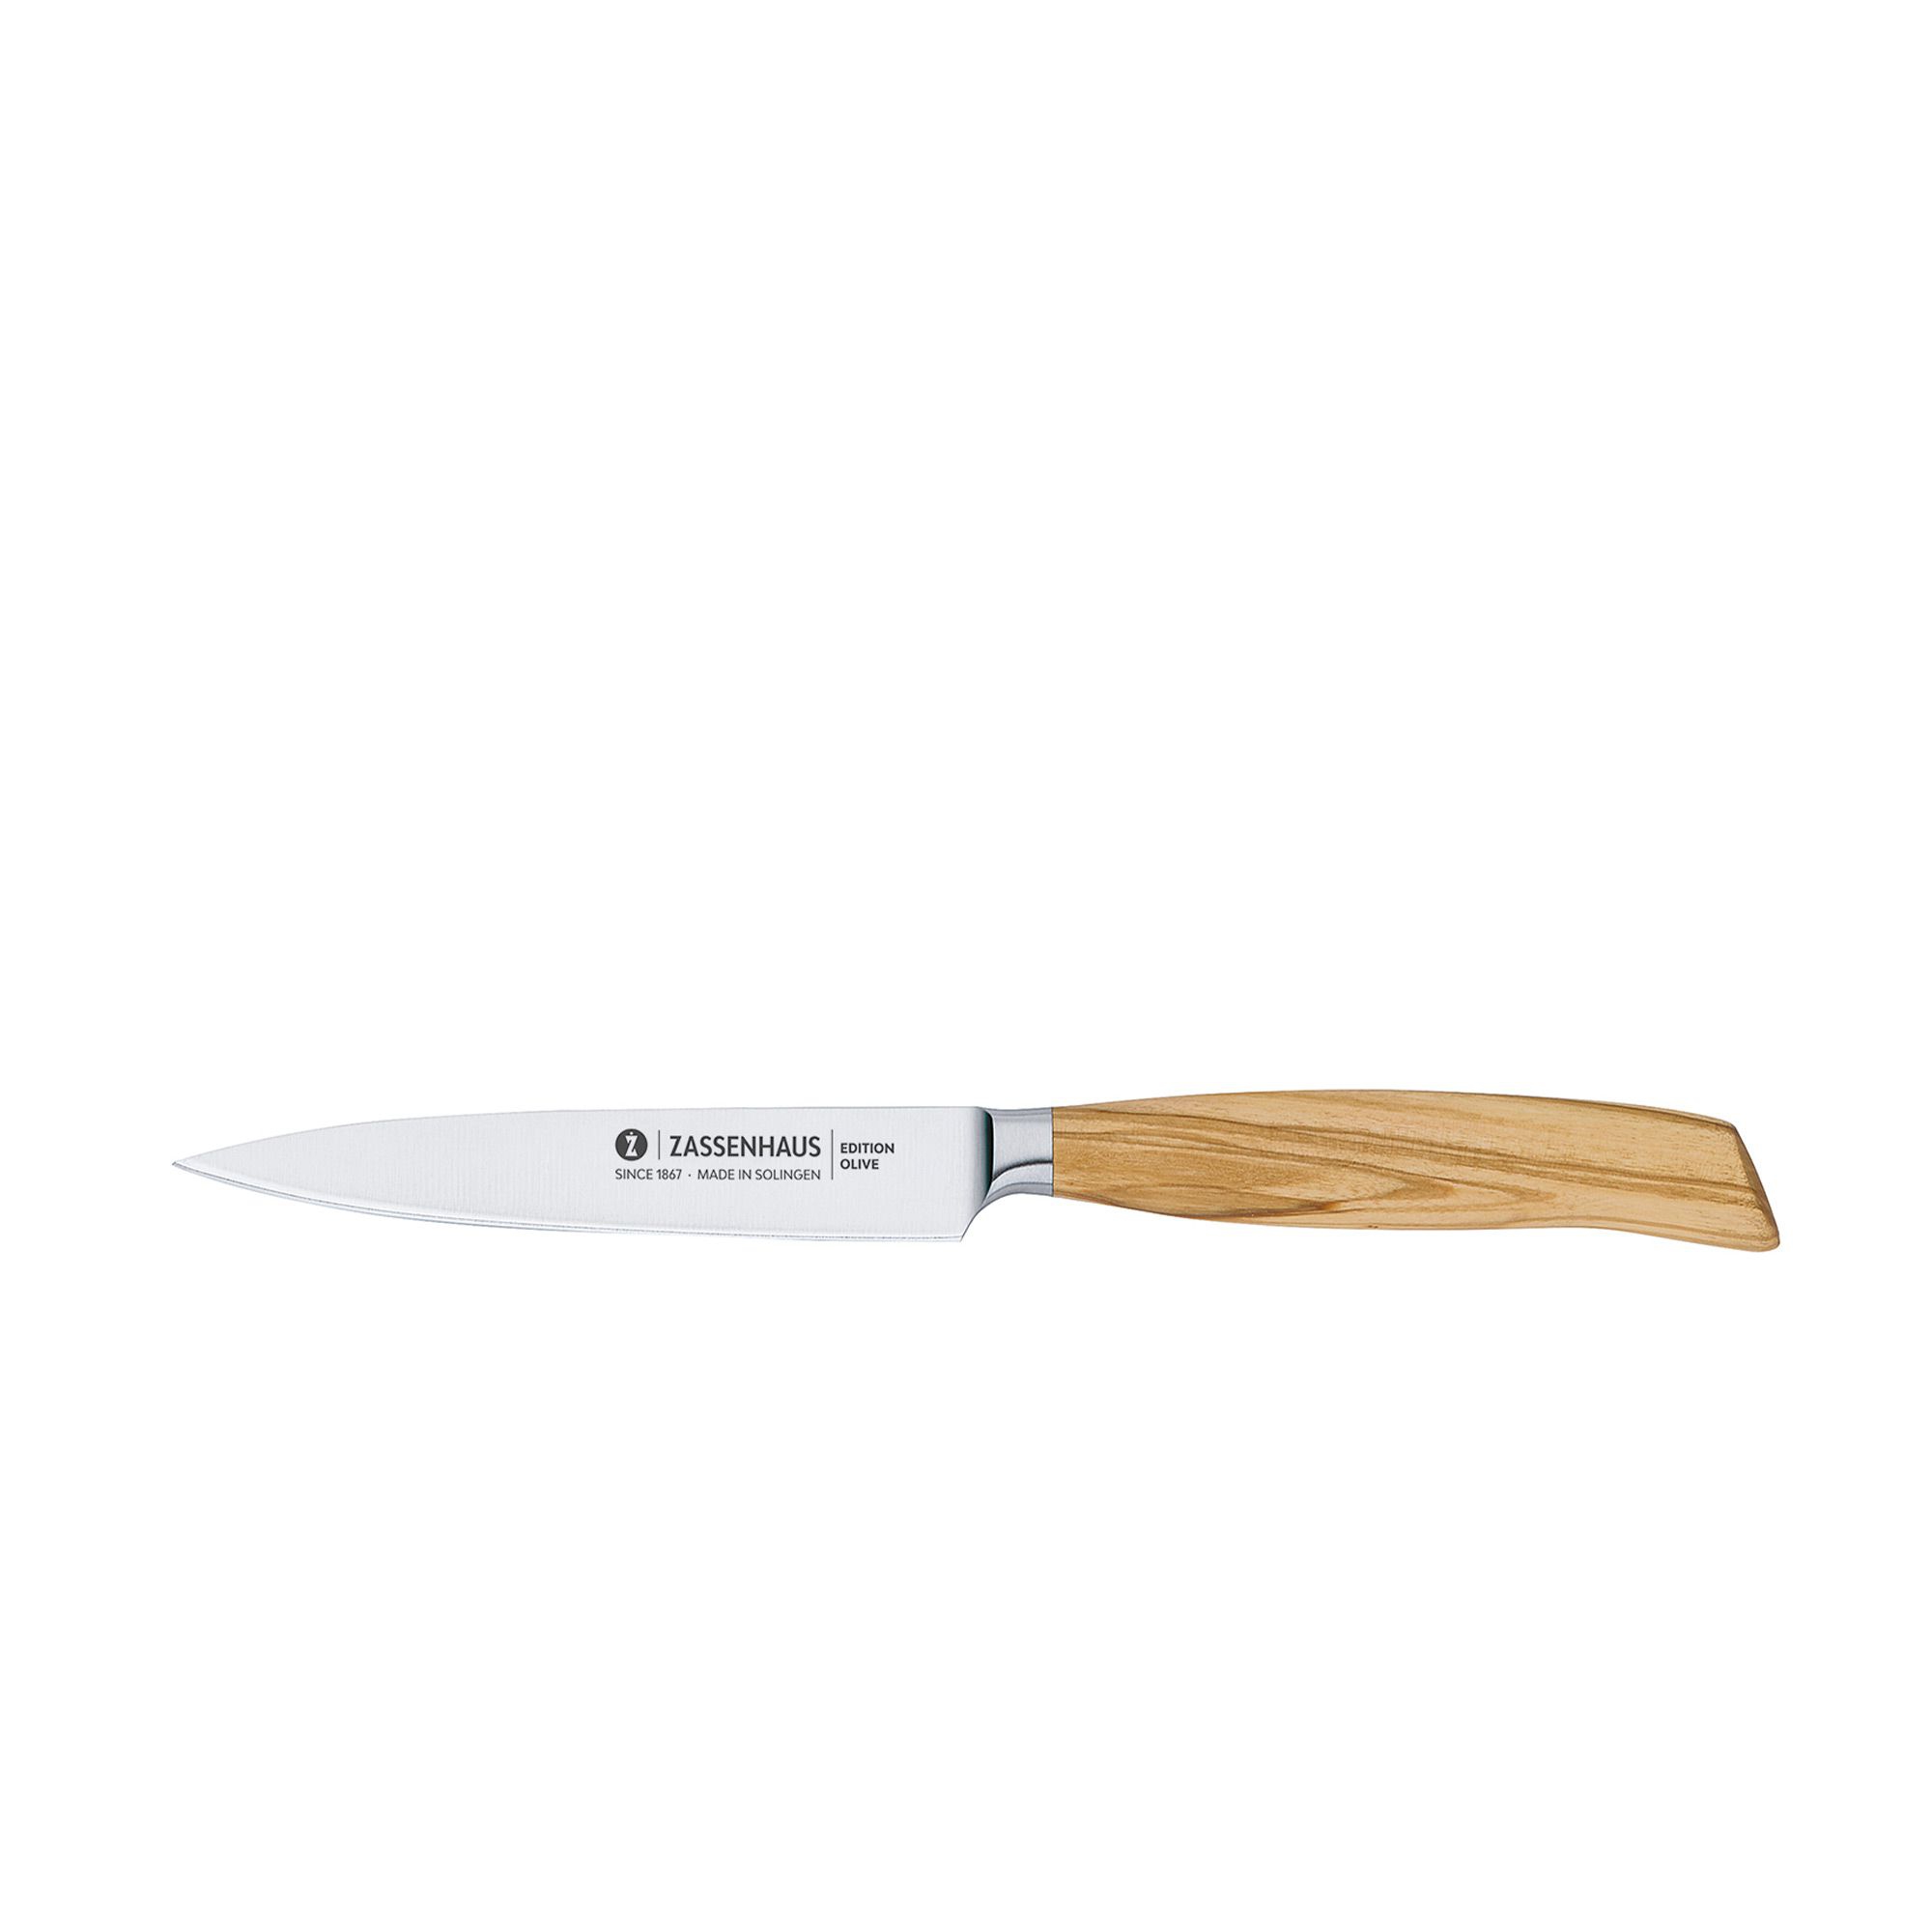 Zassenhaus - Larding knife 12cm - EDITION OLIVE